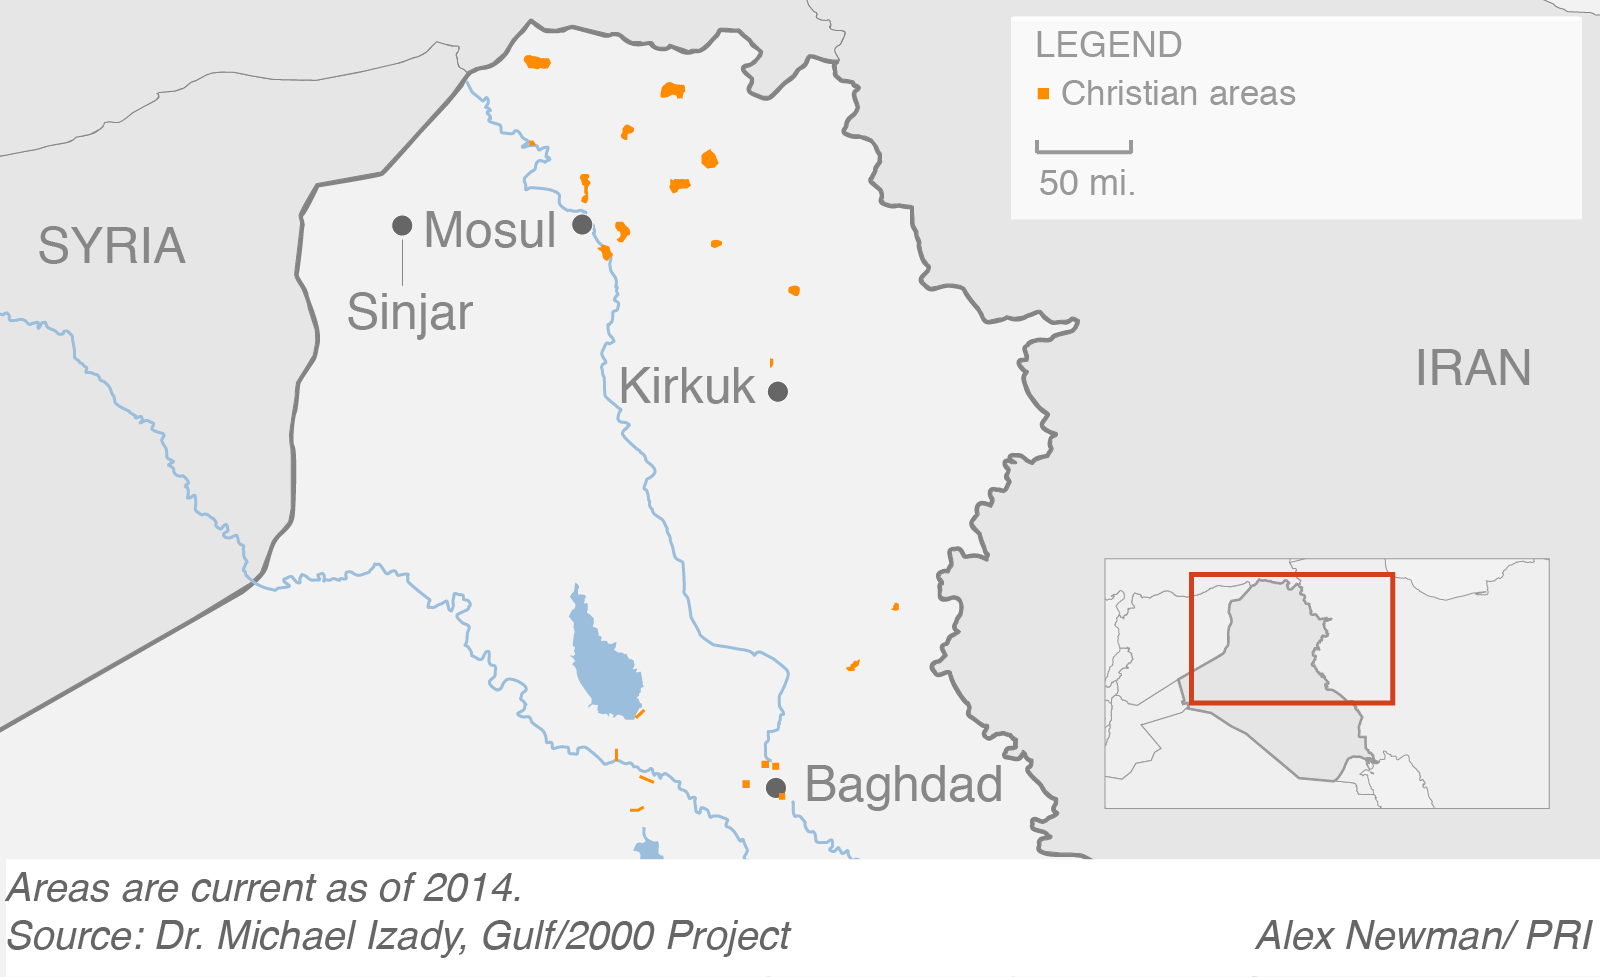 Christian areas in Iraq